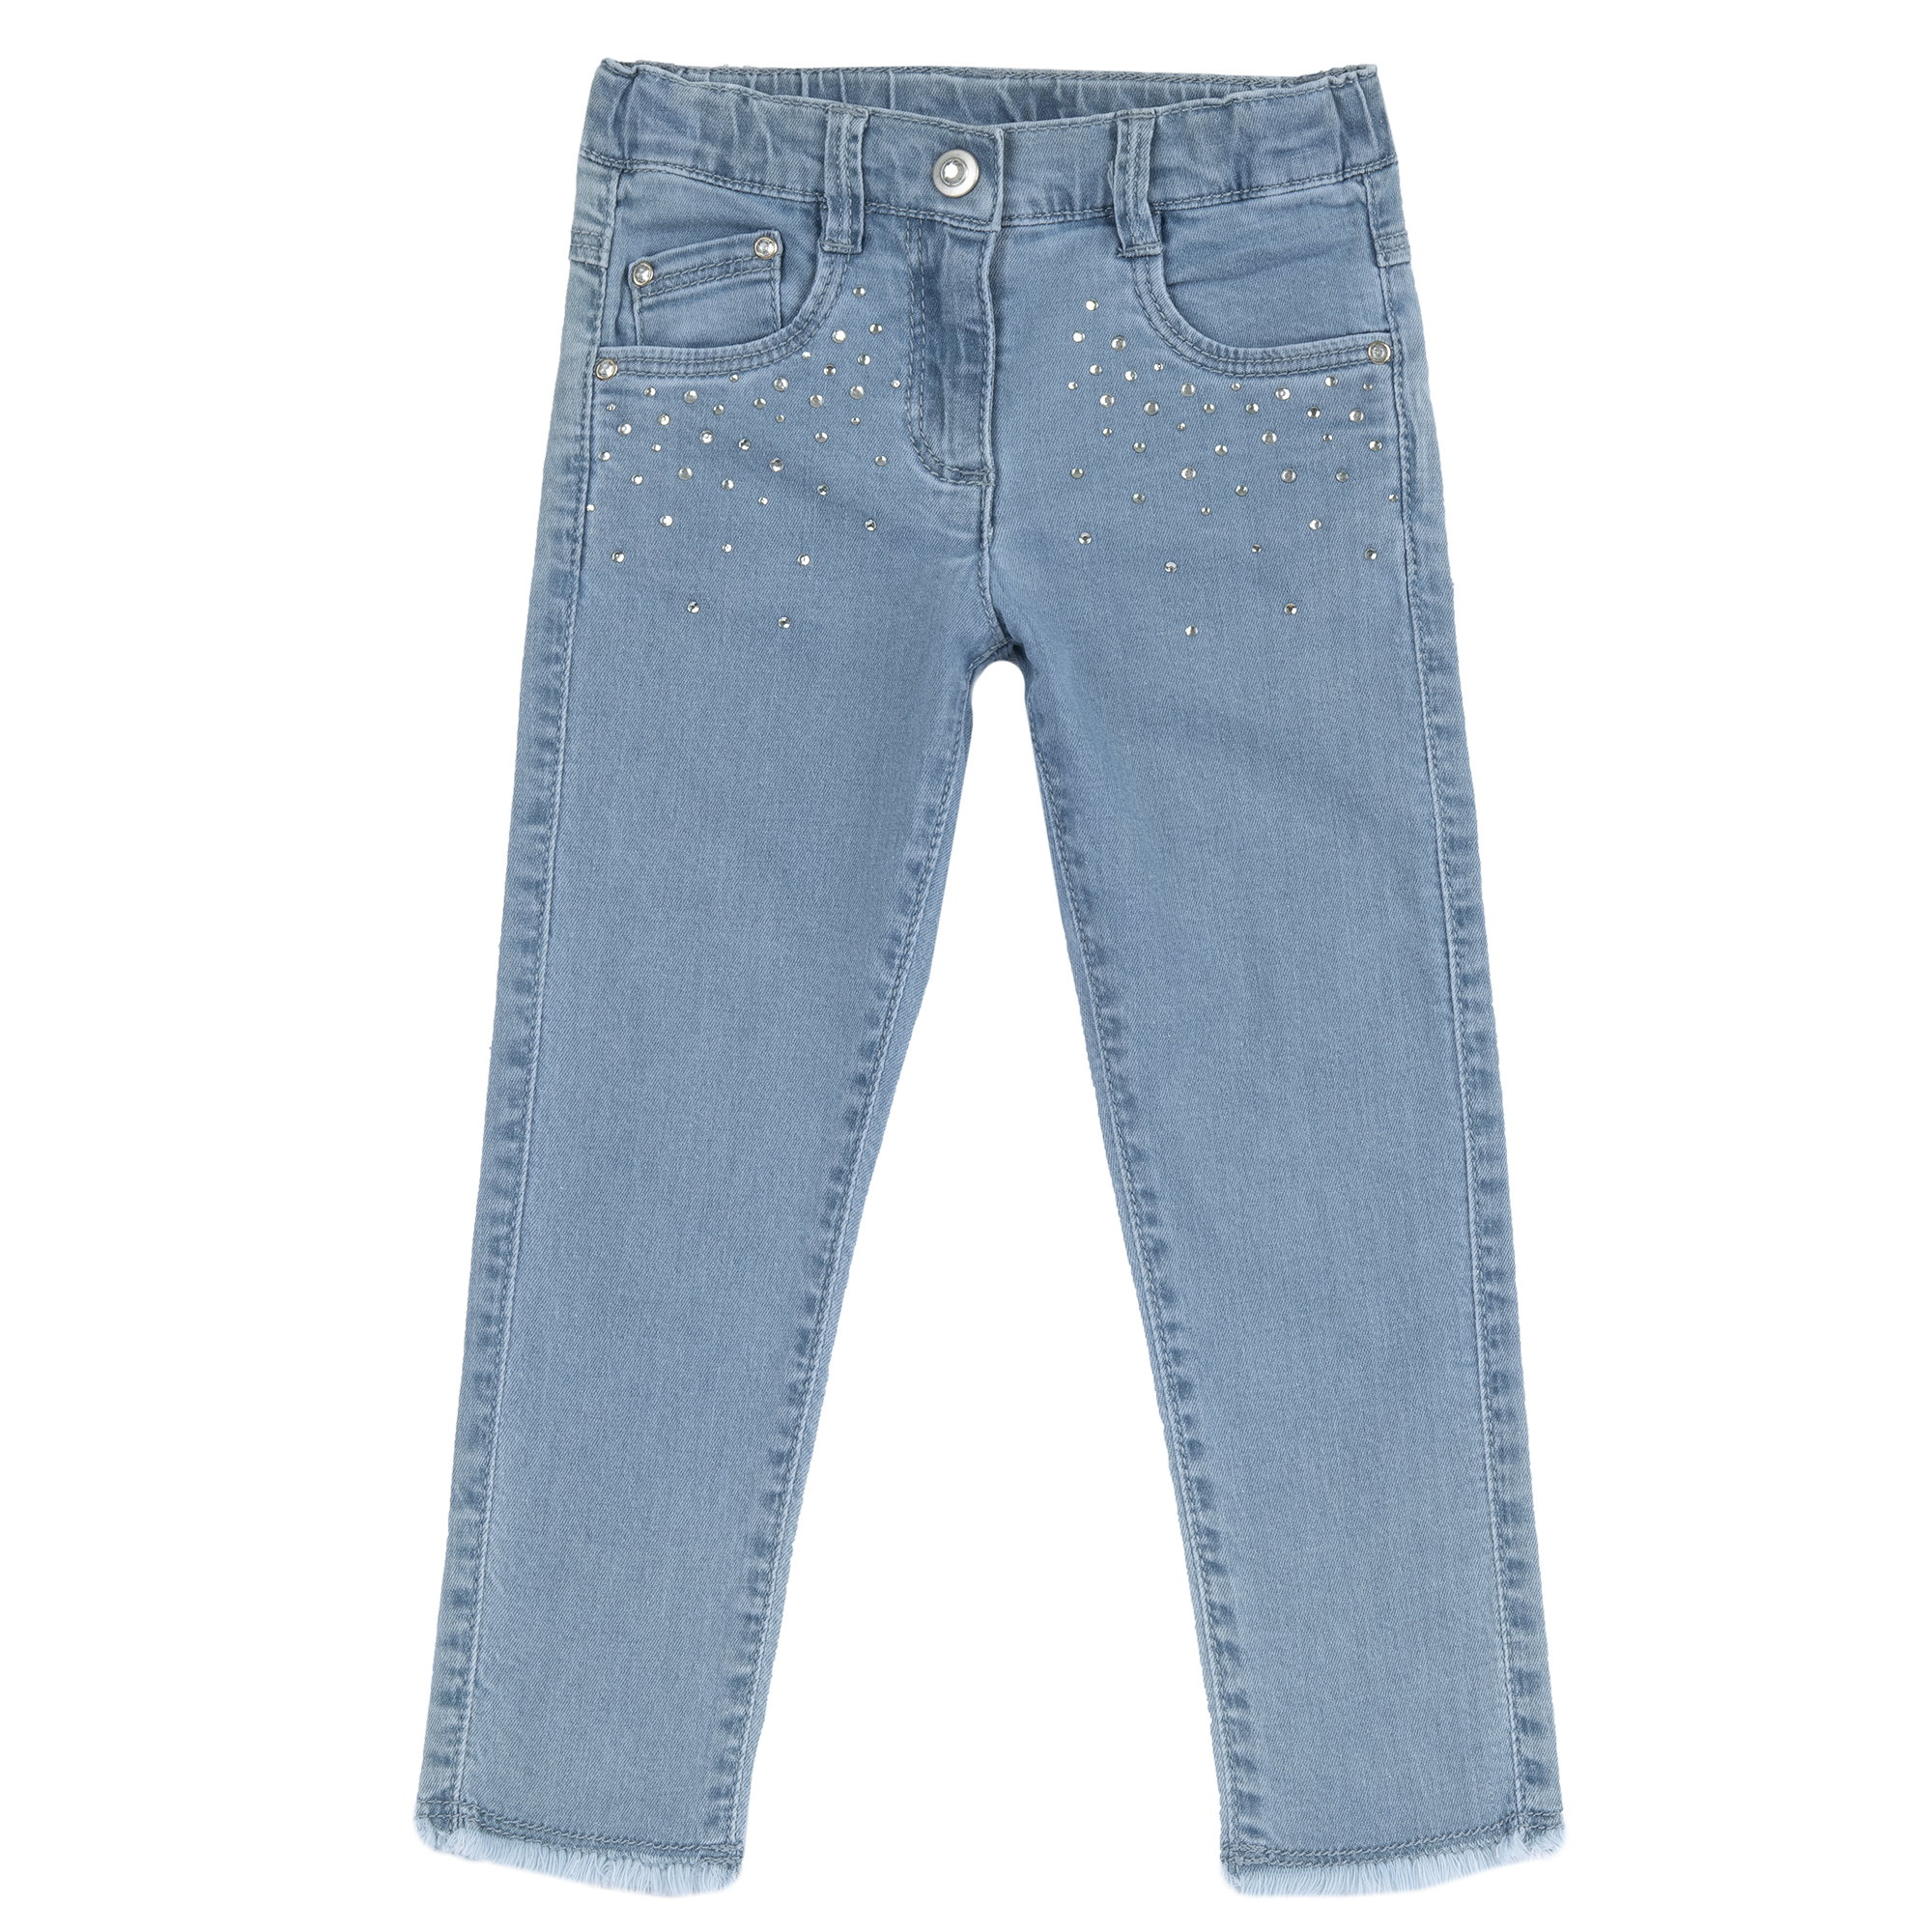 Pantaloni Copii Chicco Din Denim Stretch, Bleu 2, 08984-66mc